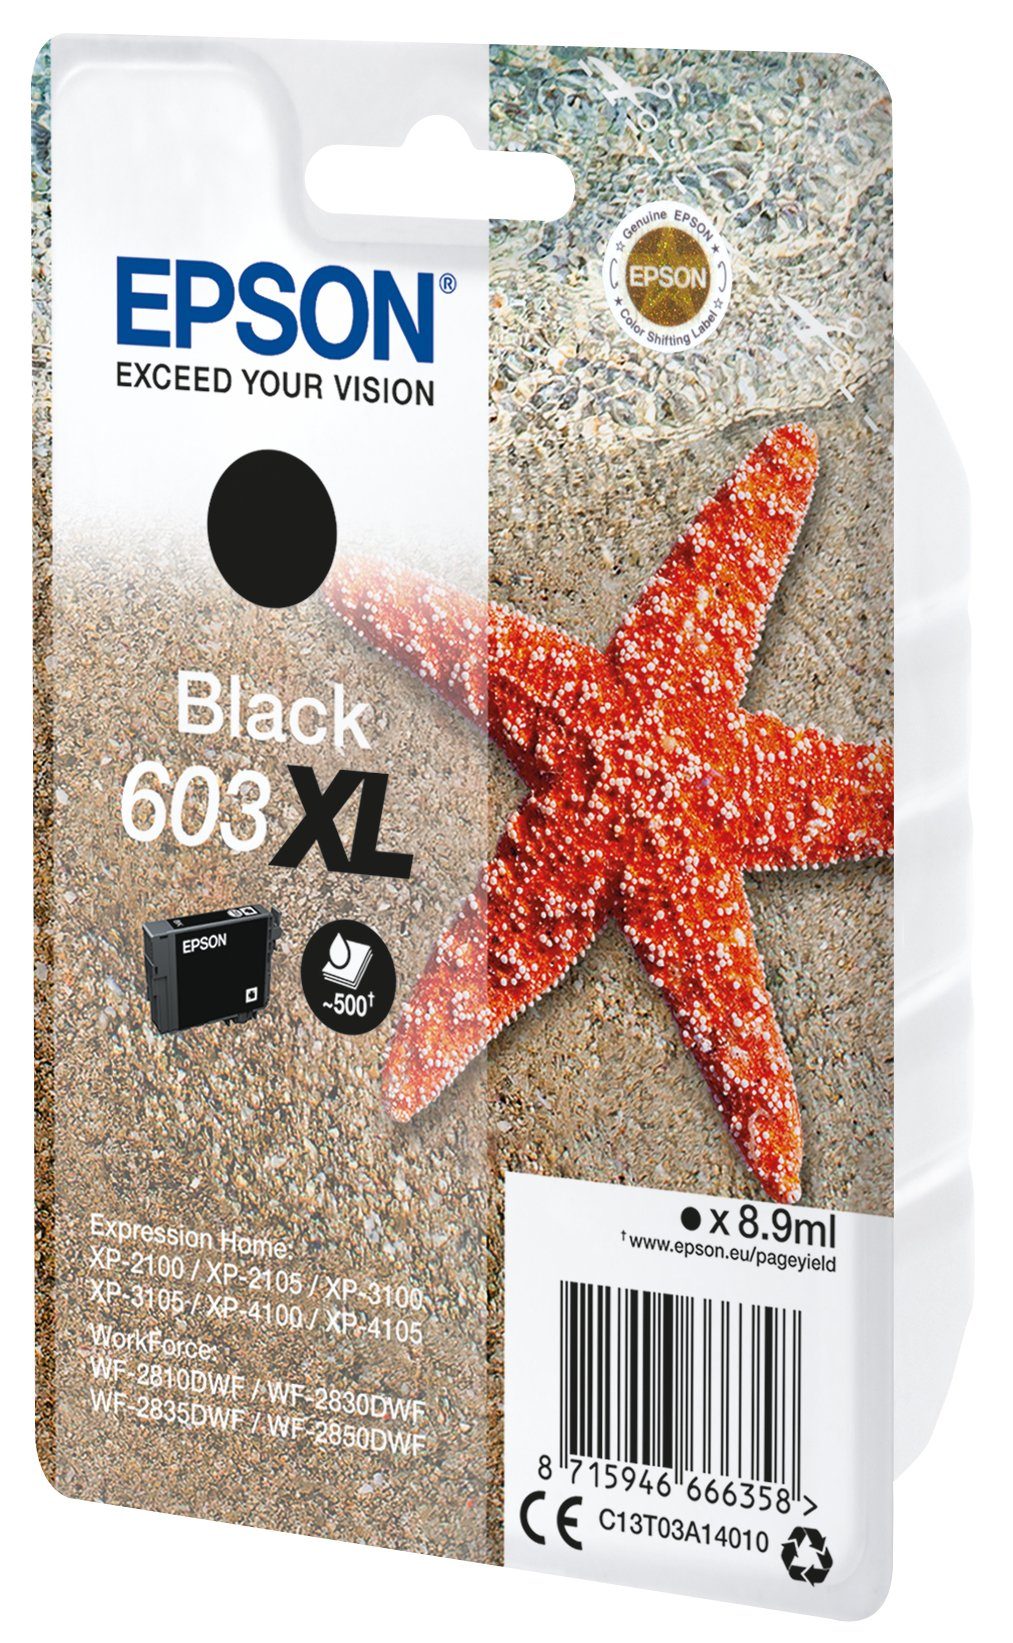 Black Epson schwarz Ink Tintenpatrone 603XL Epson Singlepack